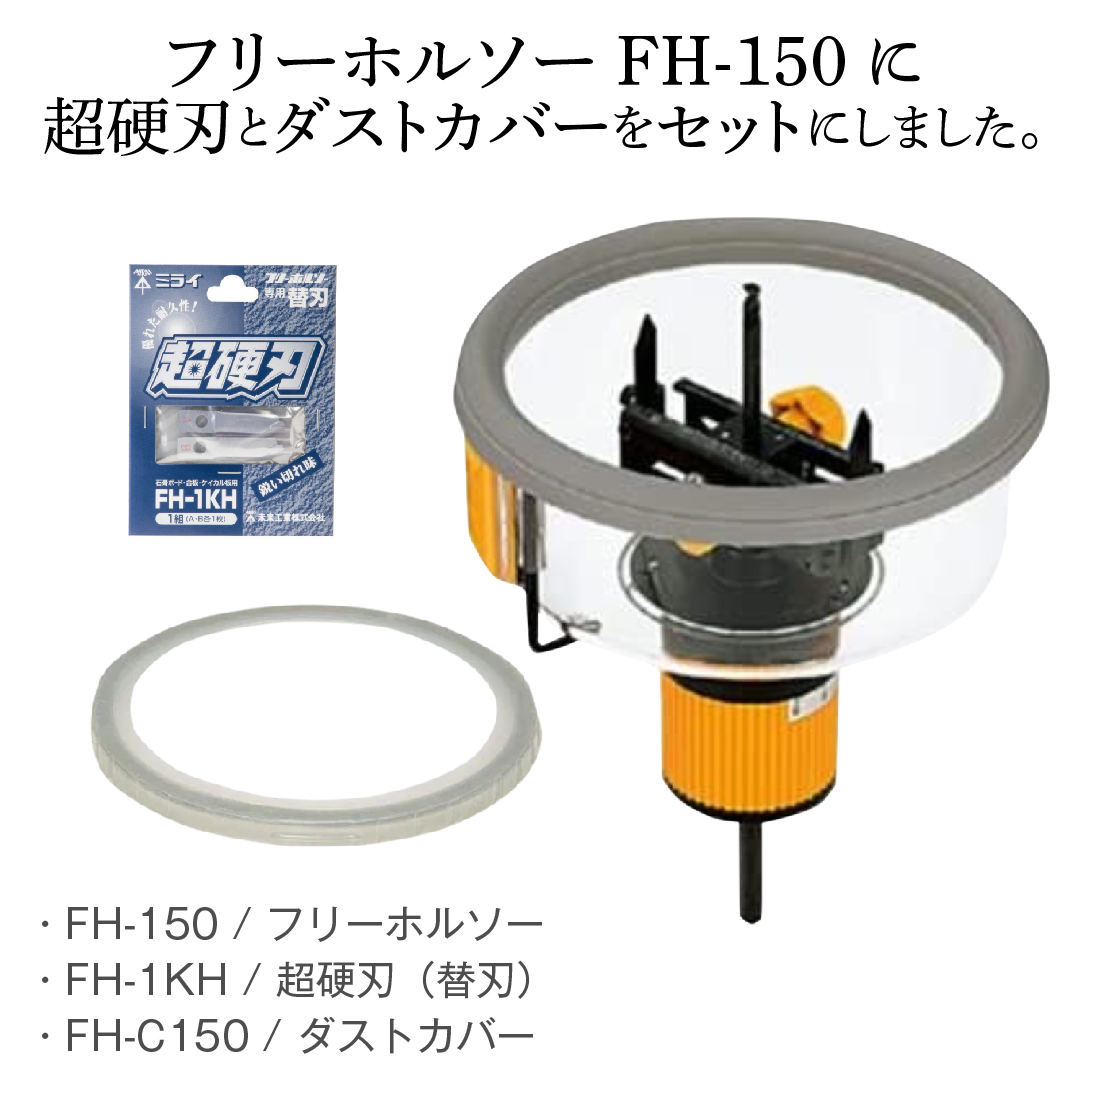 FH-150 / フリーホルソー FH-1KH / 超硬刃（替刃） FH-C150 / ダスト 